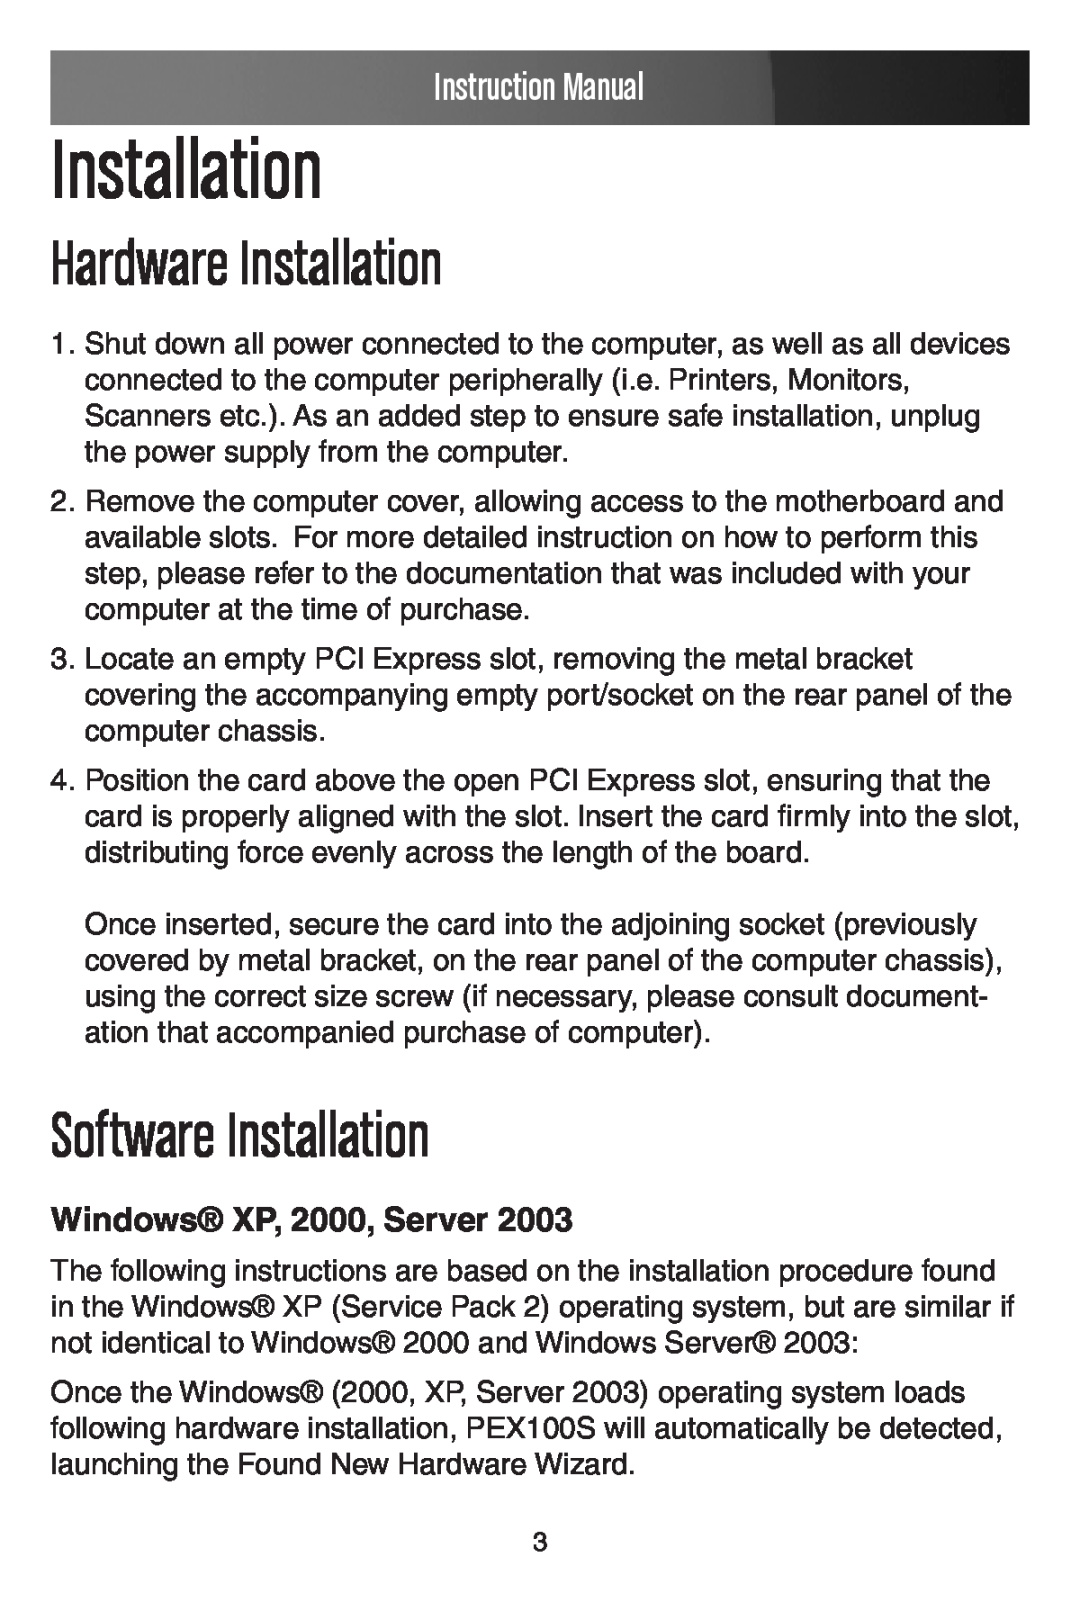 StarTech.com PEX100S manual Windows XP, 2000, Server, Hardware Installation, Software Installation, Instruction Manual 